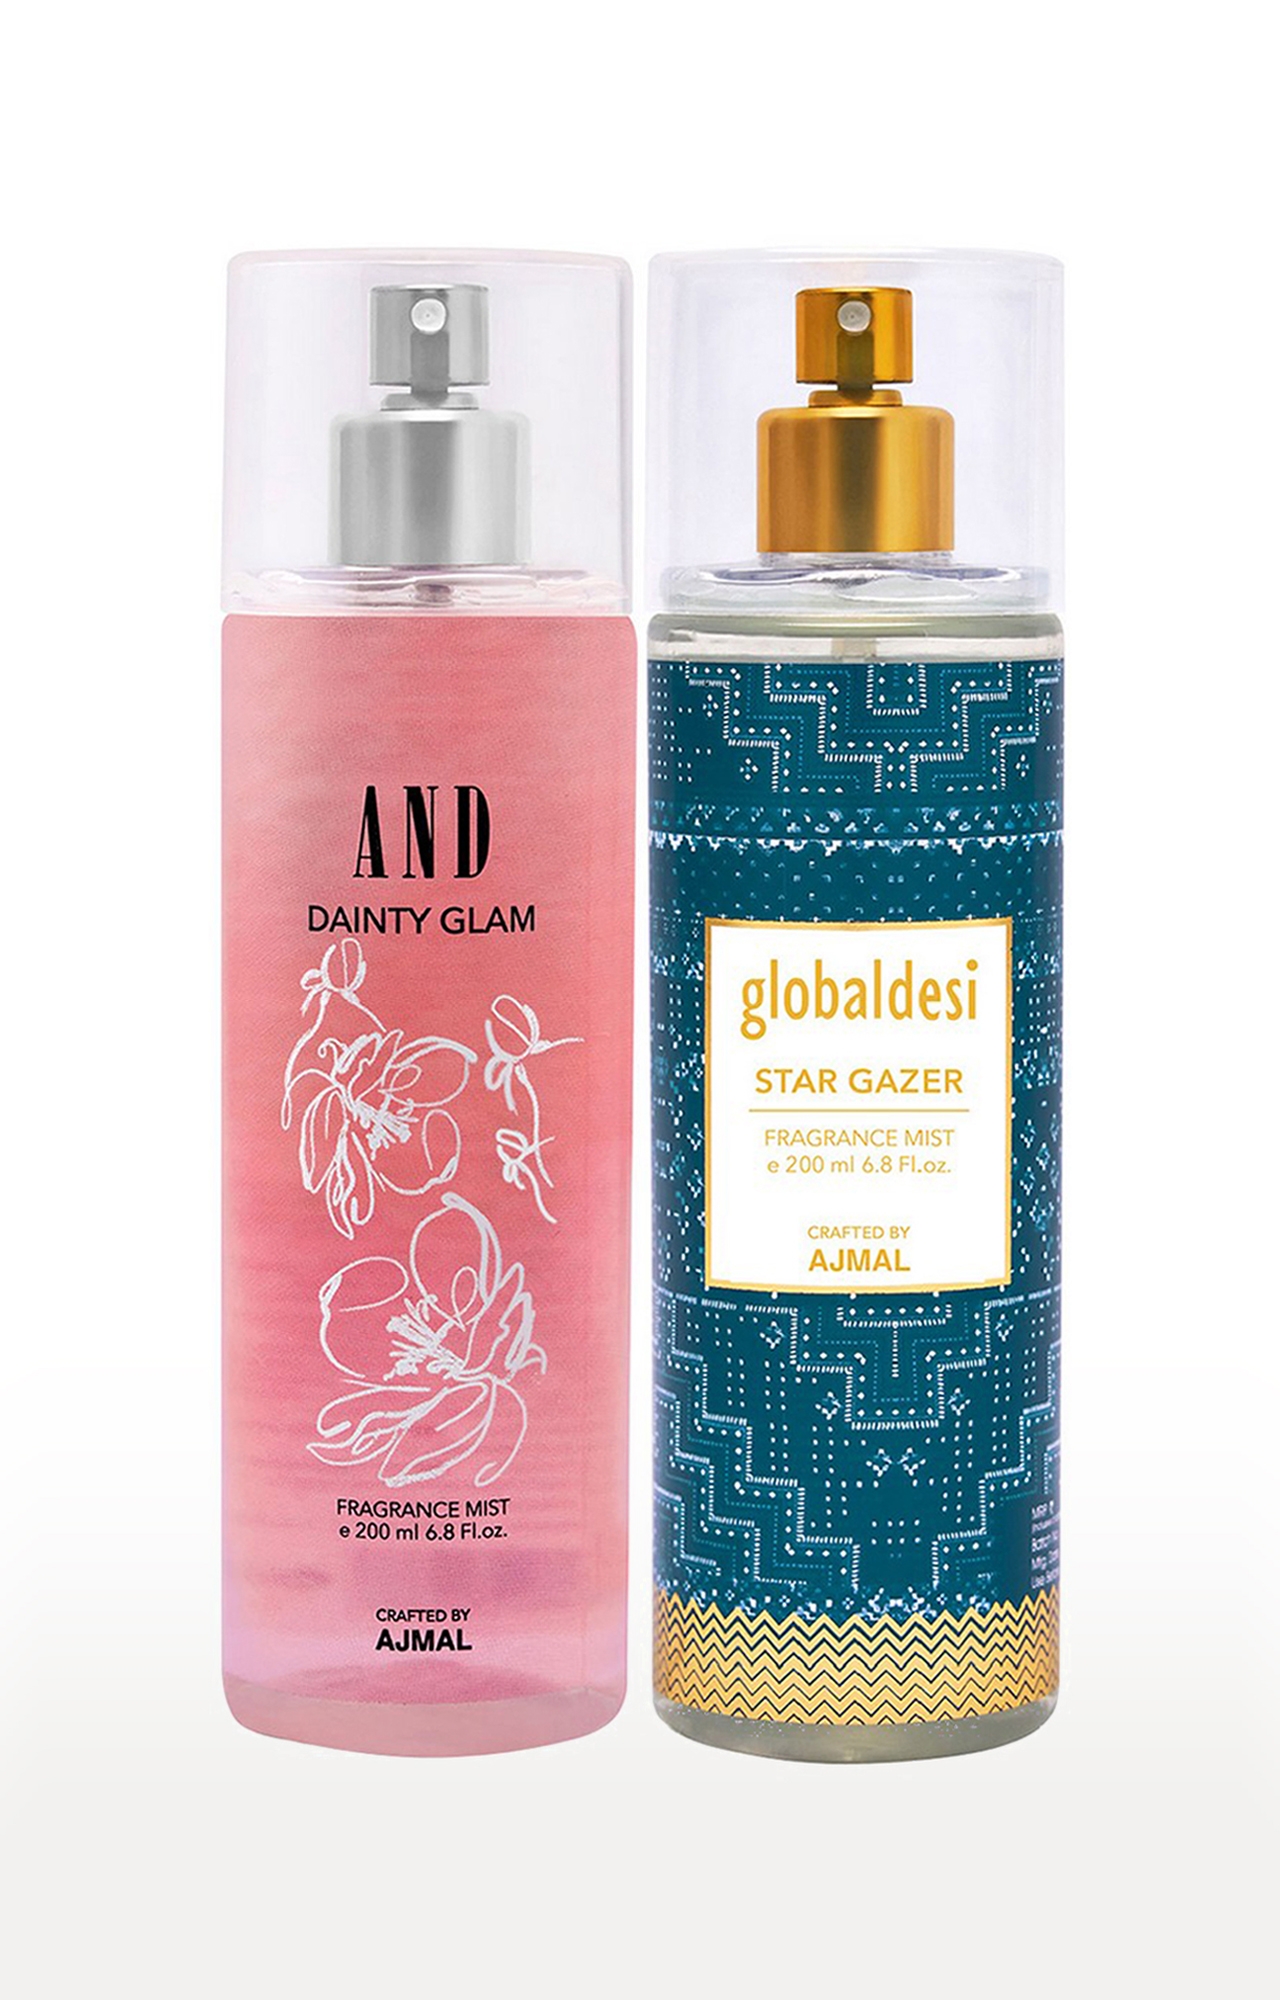 AND Dainty Glam Body Mist 200ML & Global Desi Star Gazer Body Mist 200ML Long Lasting Scent Spray Gift For Women Perfume FREE